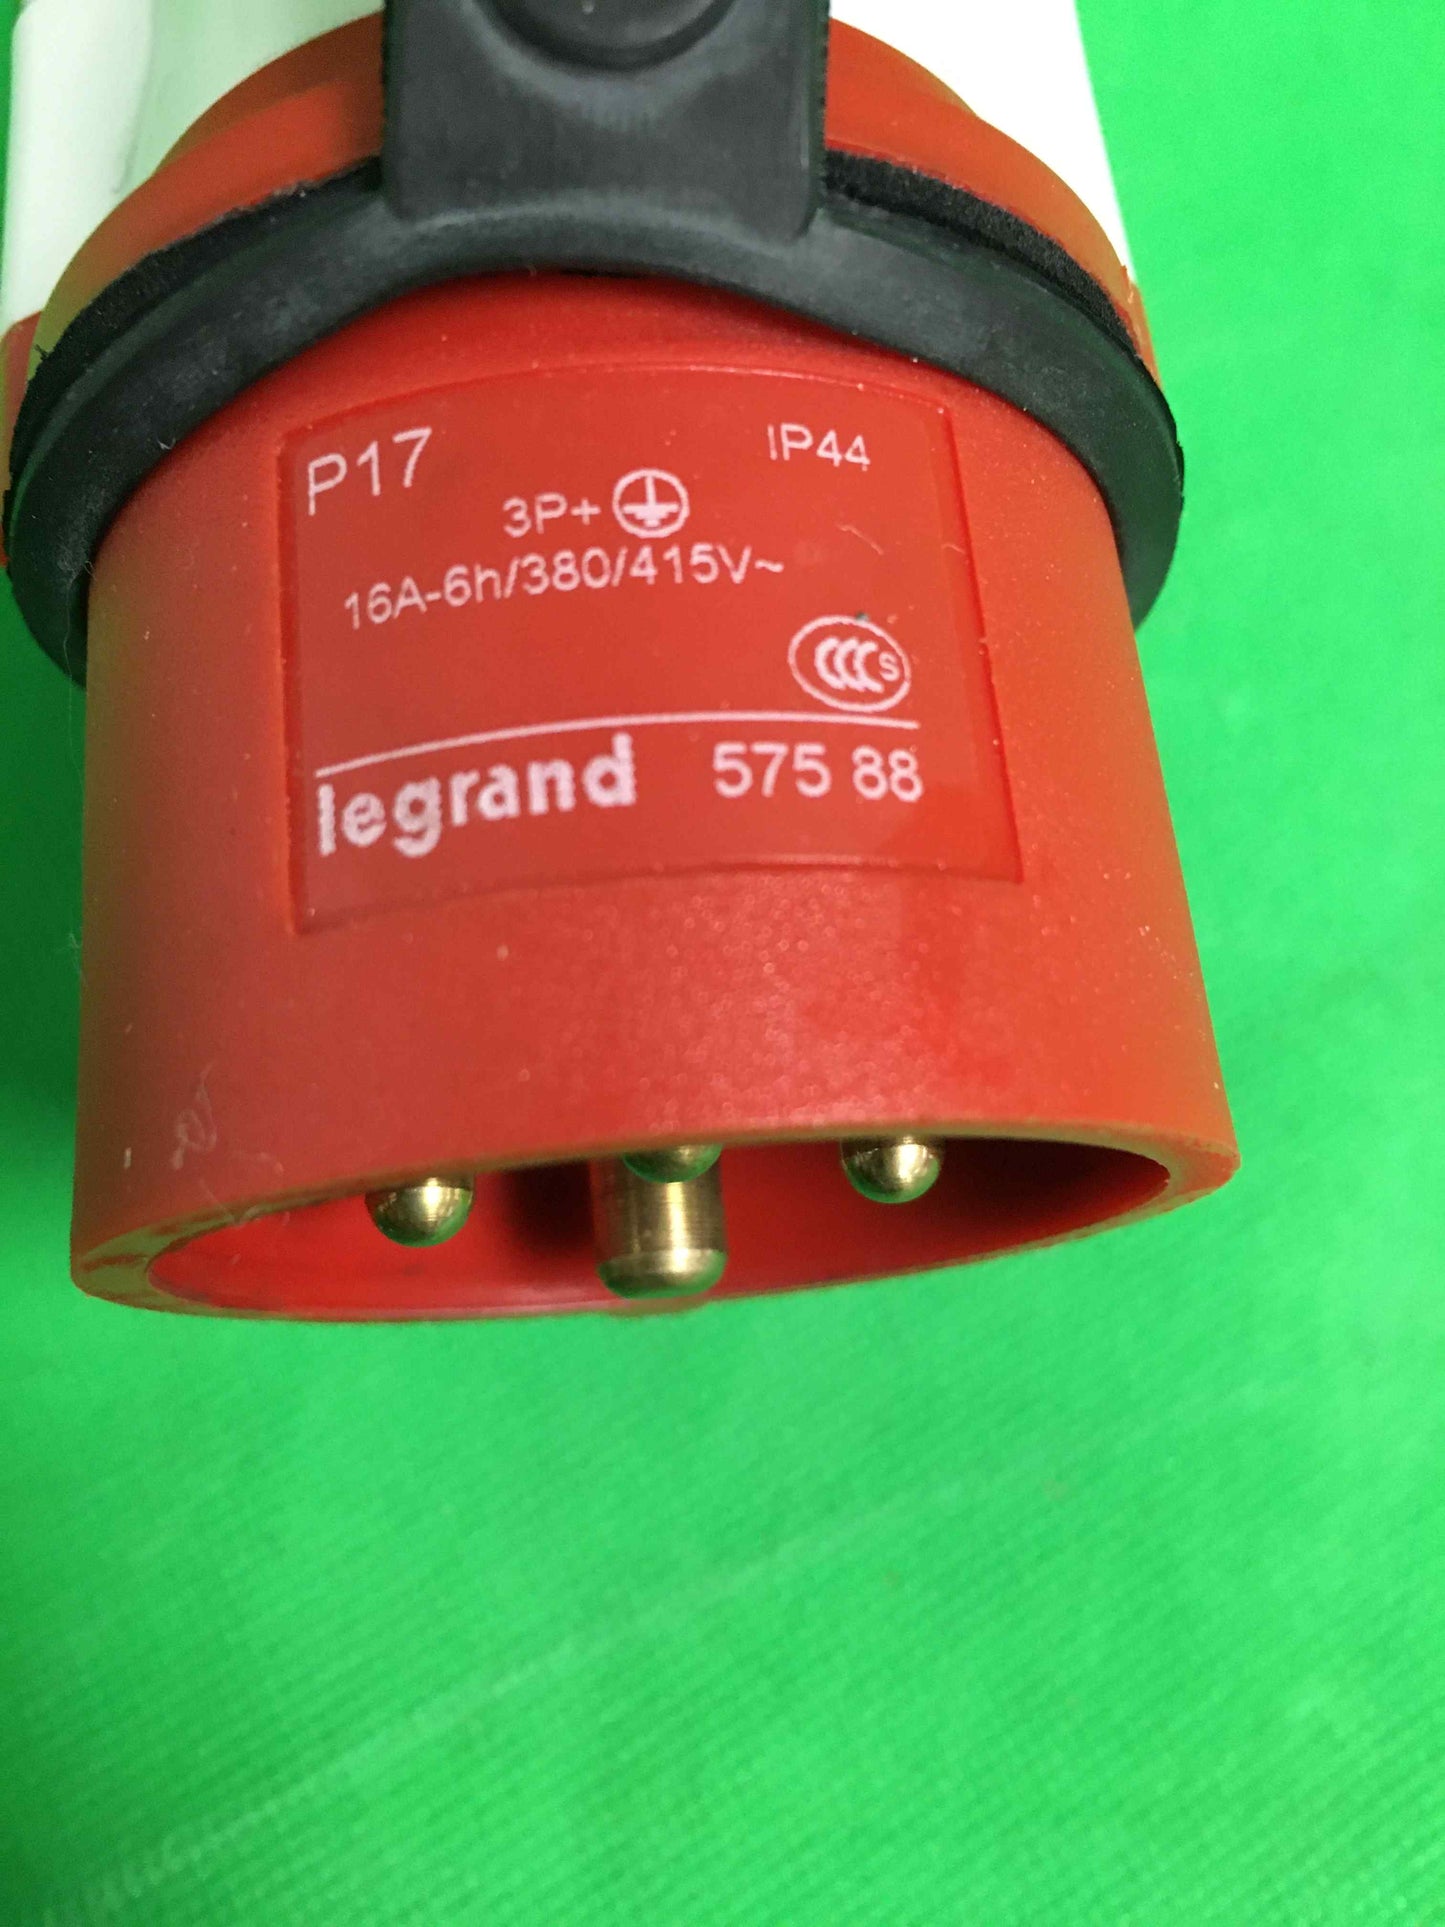 Legrand-575 88/57588